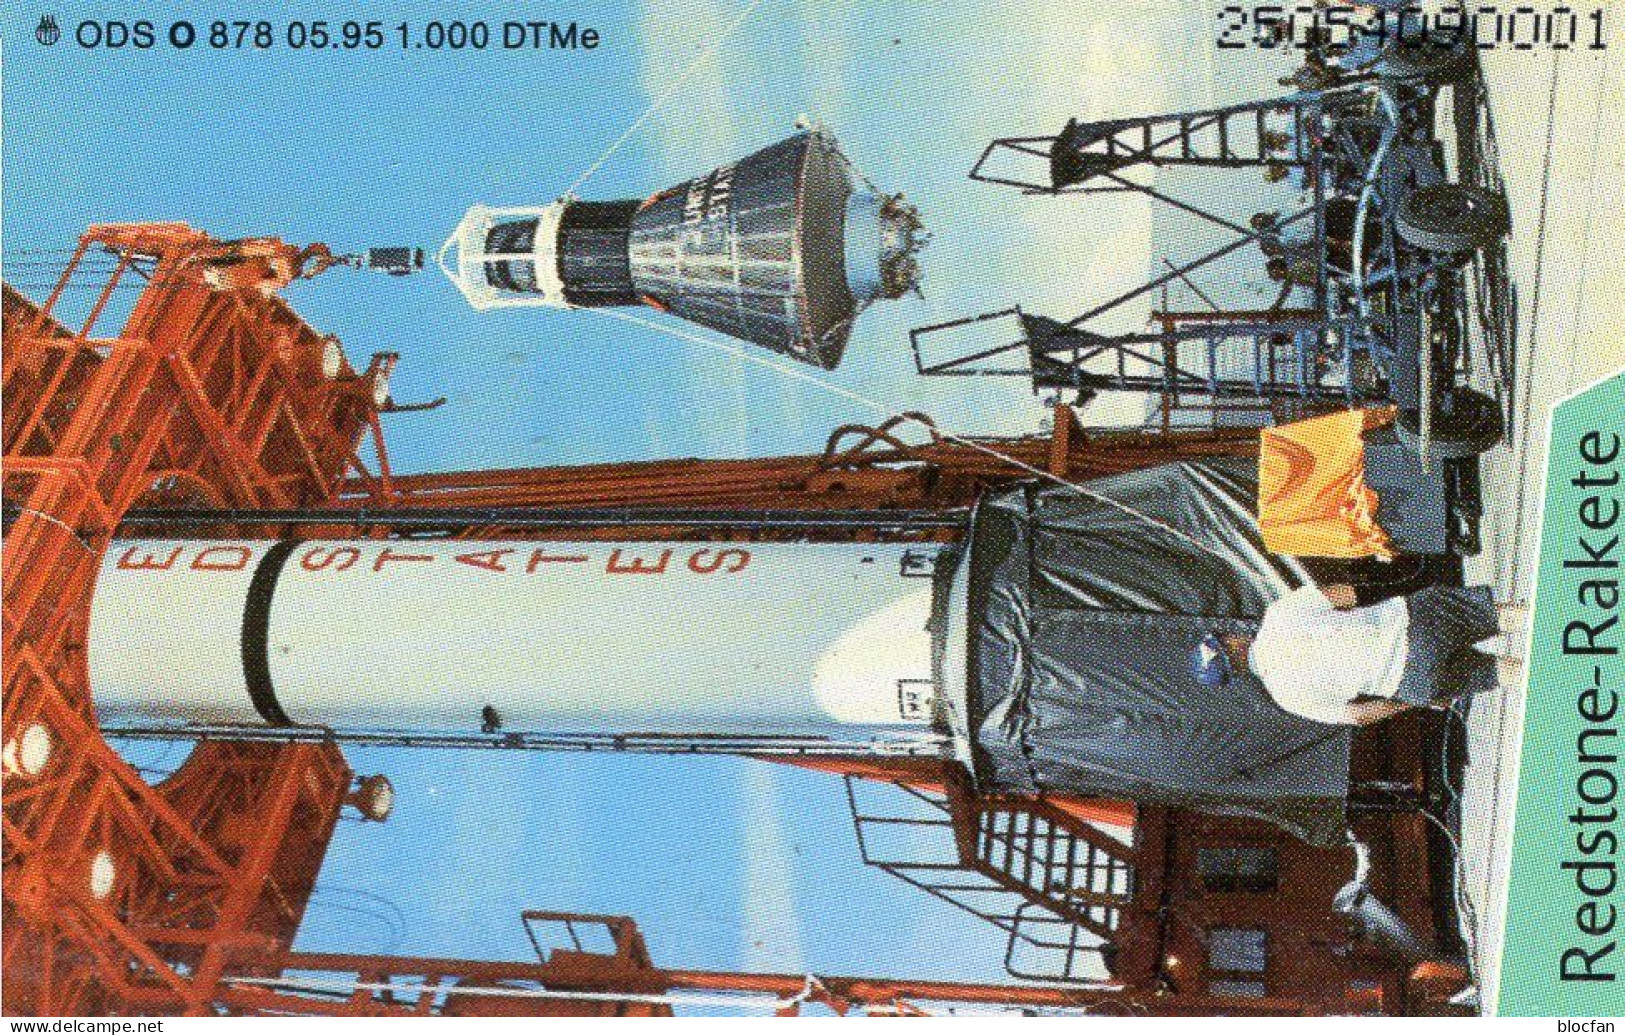 NASA Raumfahrt TK O 878/1995 ** 30€ 1.000 Expl. Weltraum-Konstruktion USA Redstone-Rakete TC Space Phonecard Of Germany - Espacio